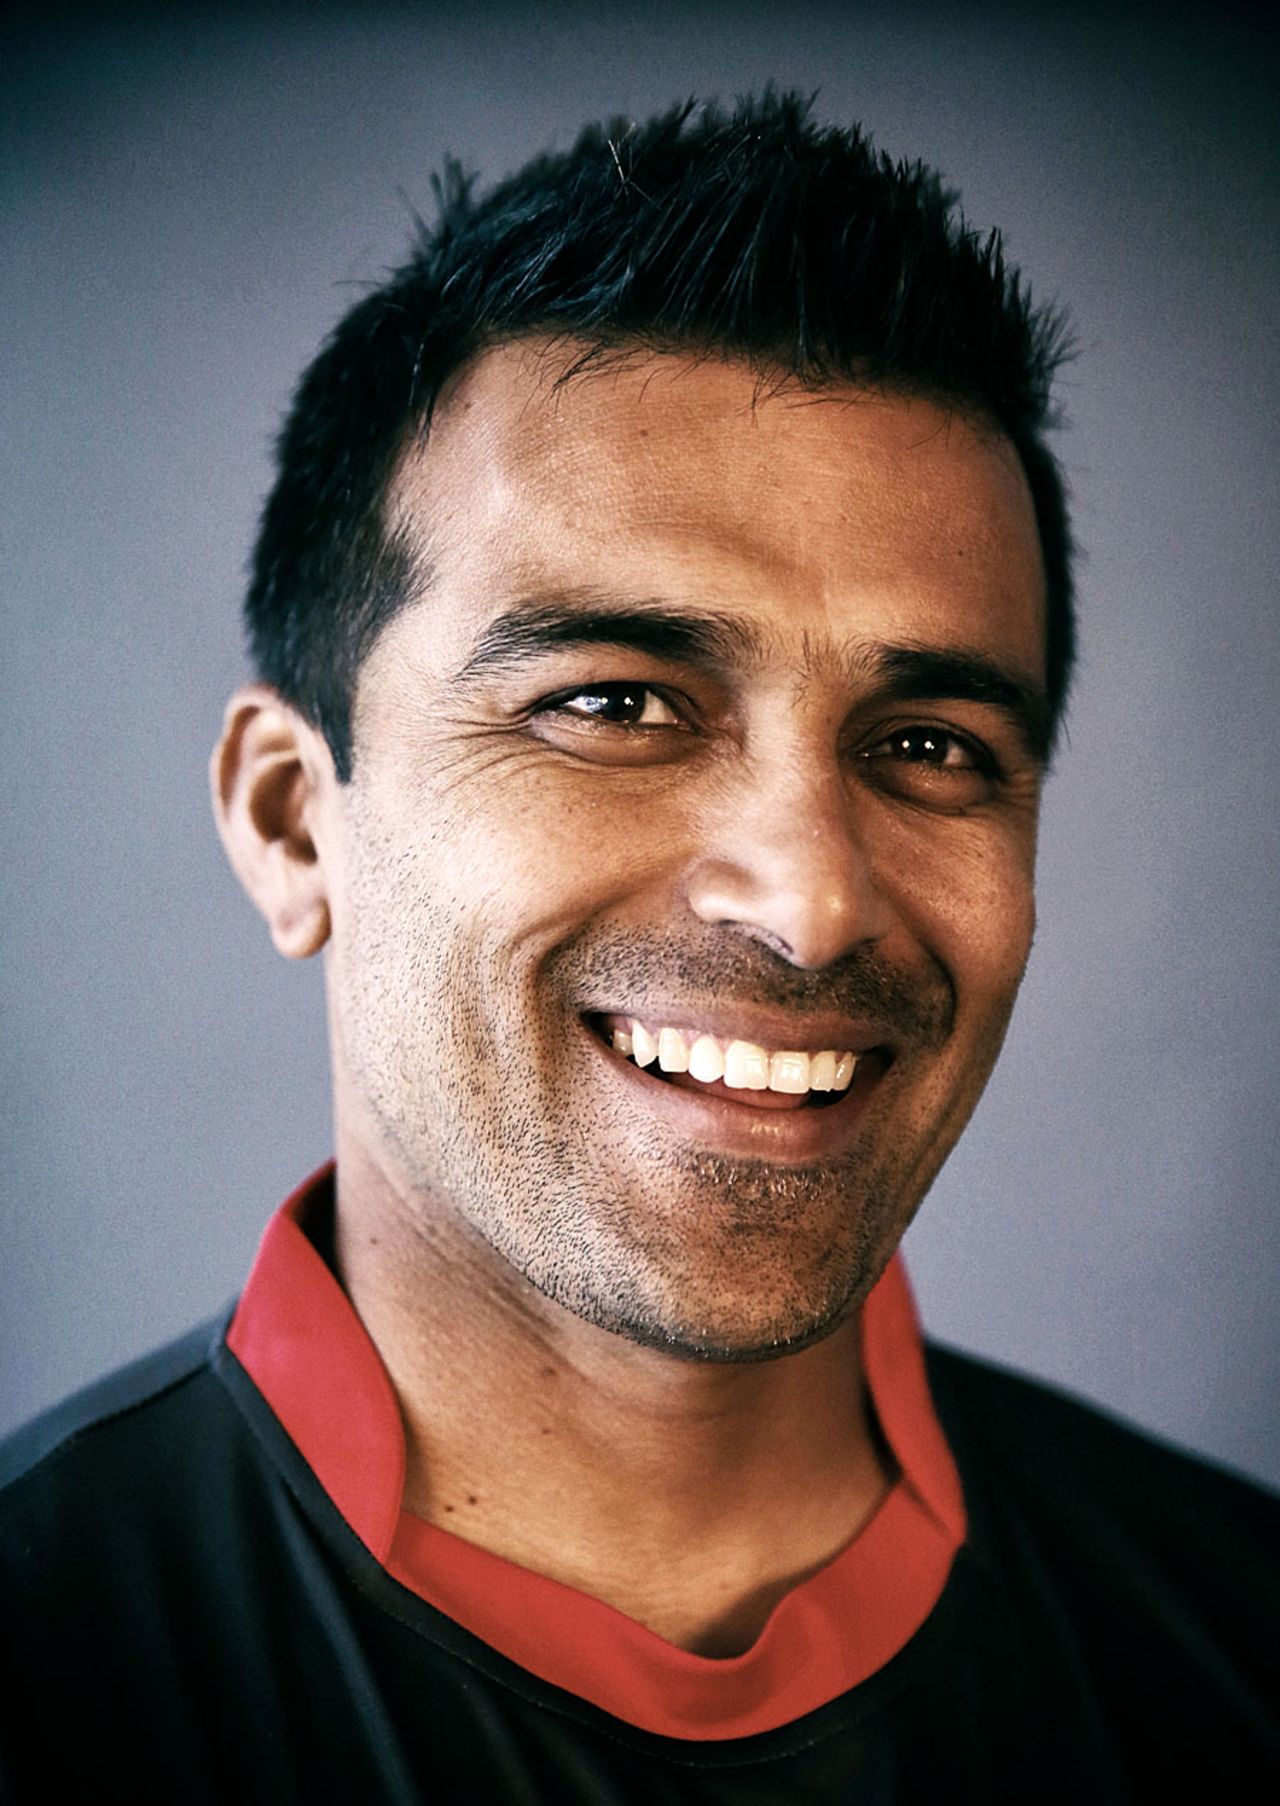 Khurram Khan headshot, Melbourne, February 8, 2015